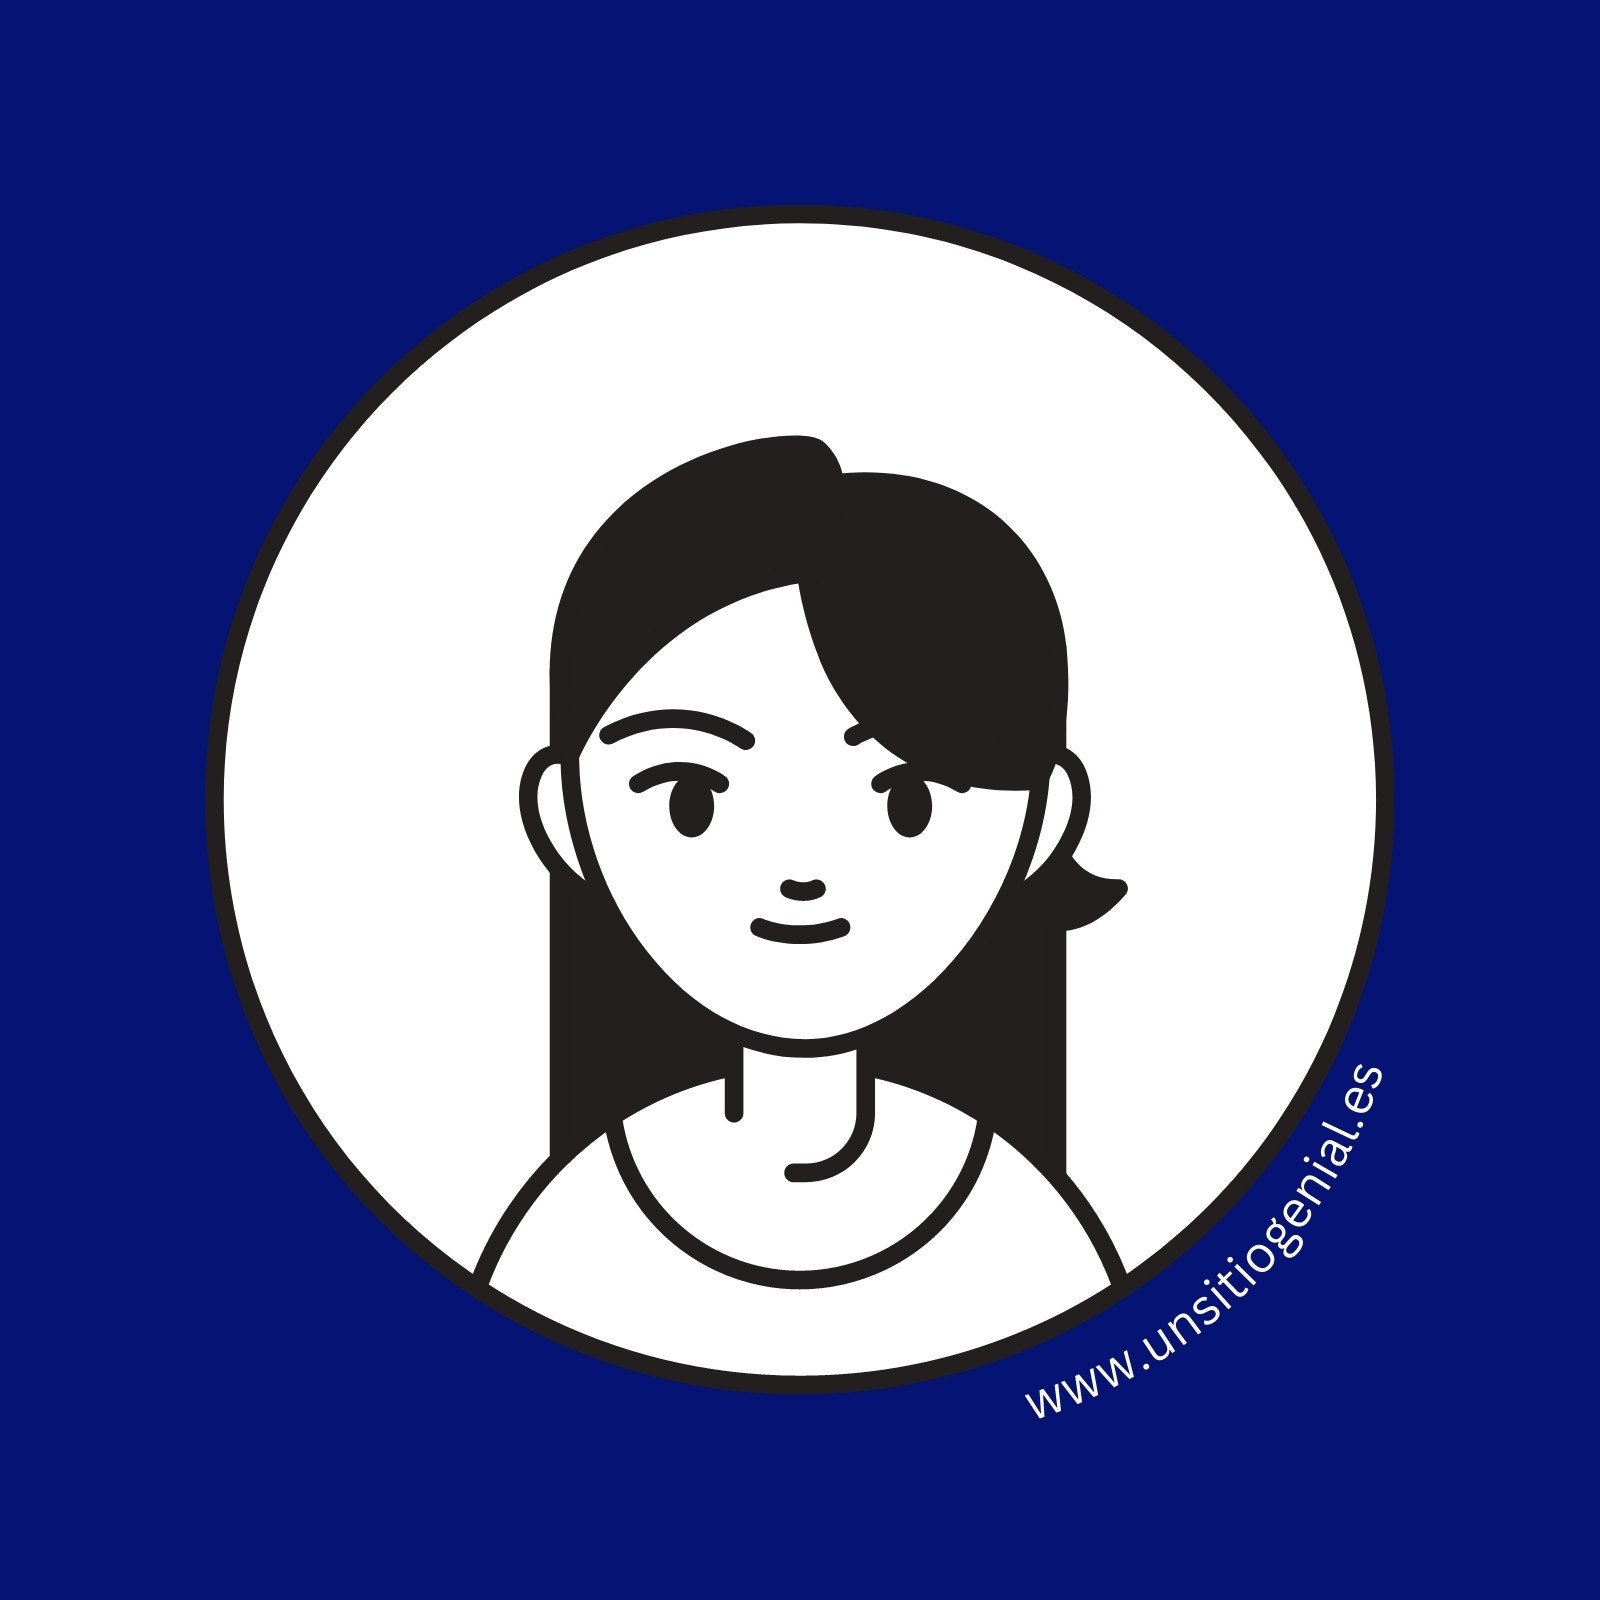 Avatar Foto de Perfil Mujer Dibujo Corporativo Empresa Ilustrado Moderno Sencillo Azul